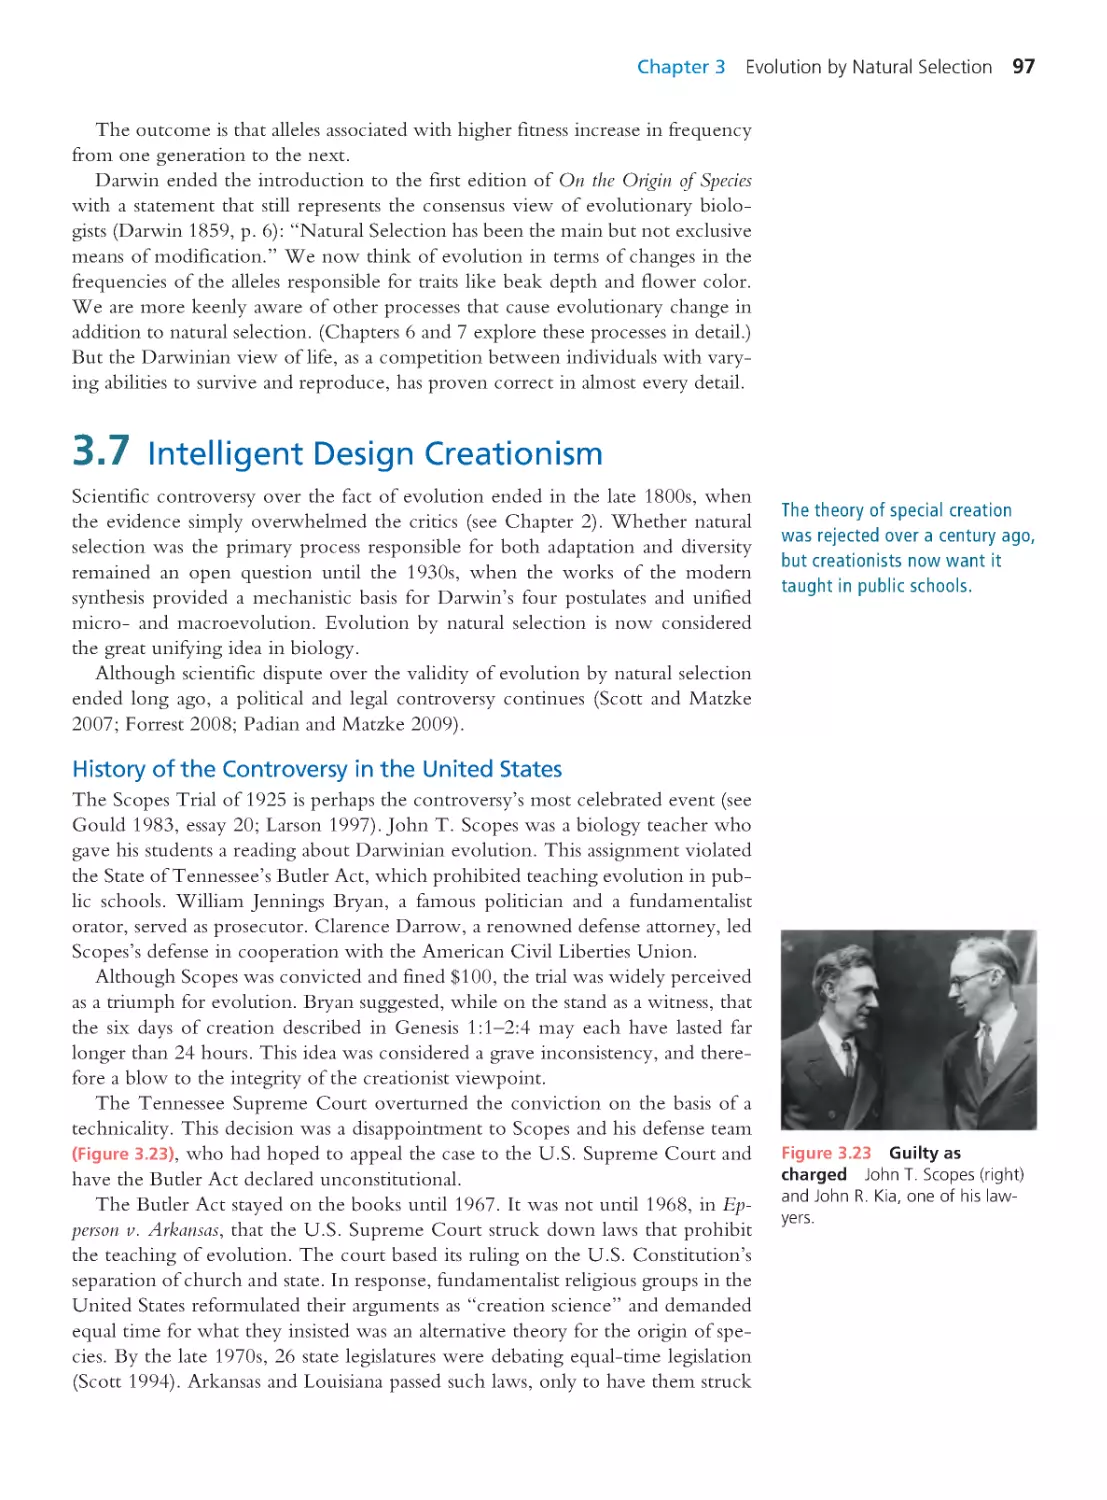 3.7 Intelligent Design Creationism